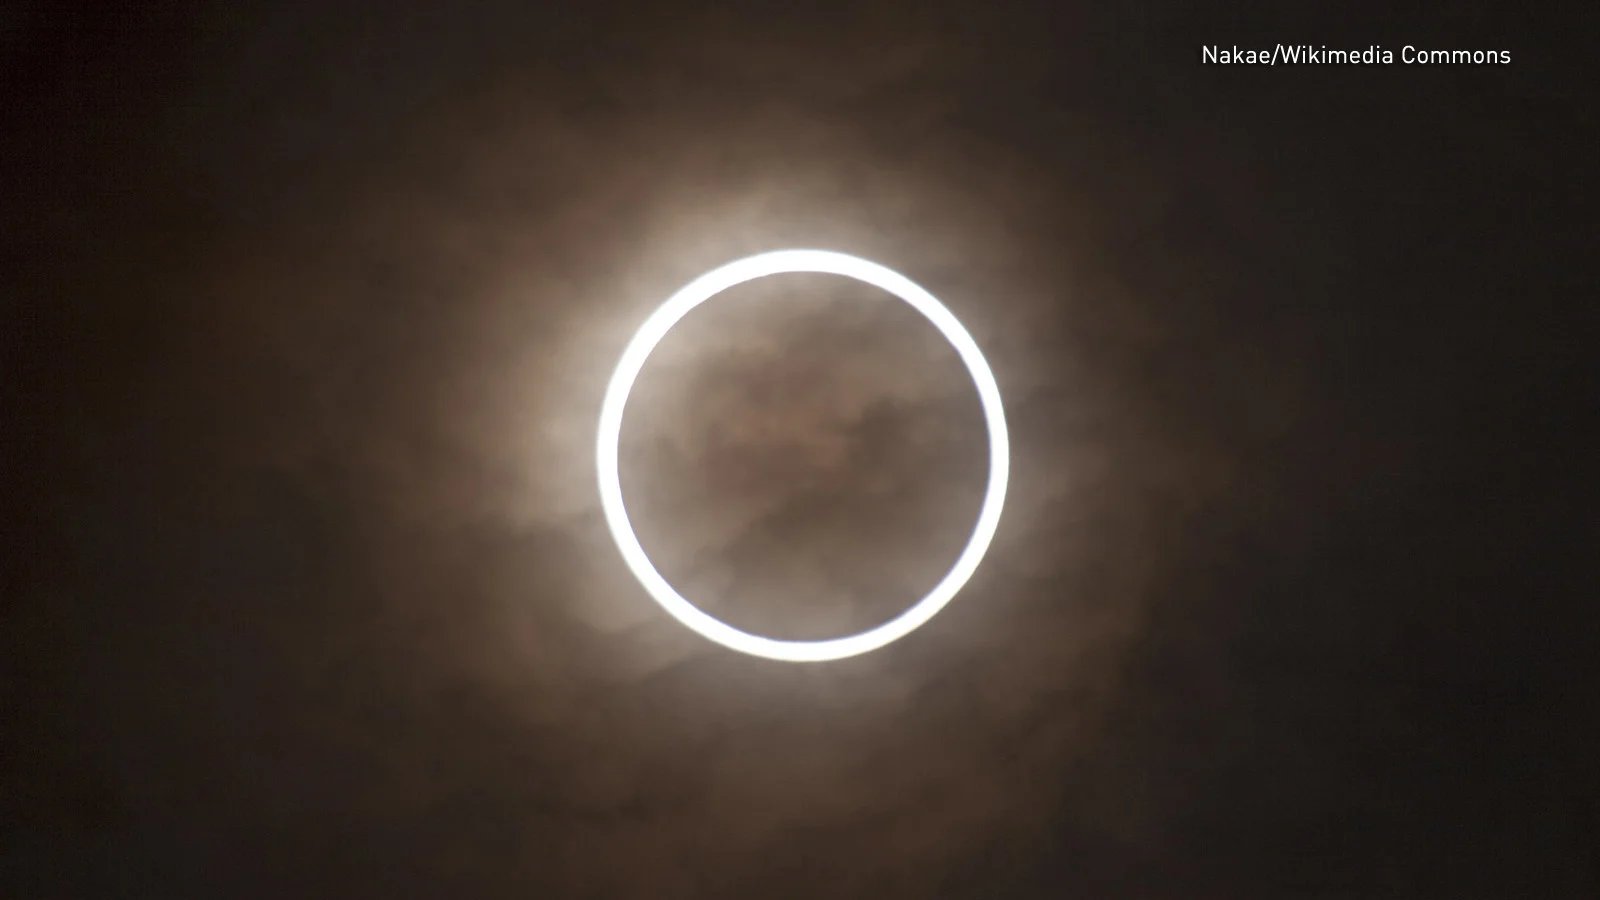 Annular-eclipse-2012-Nakae-Wiki-Commons